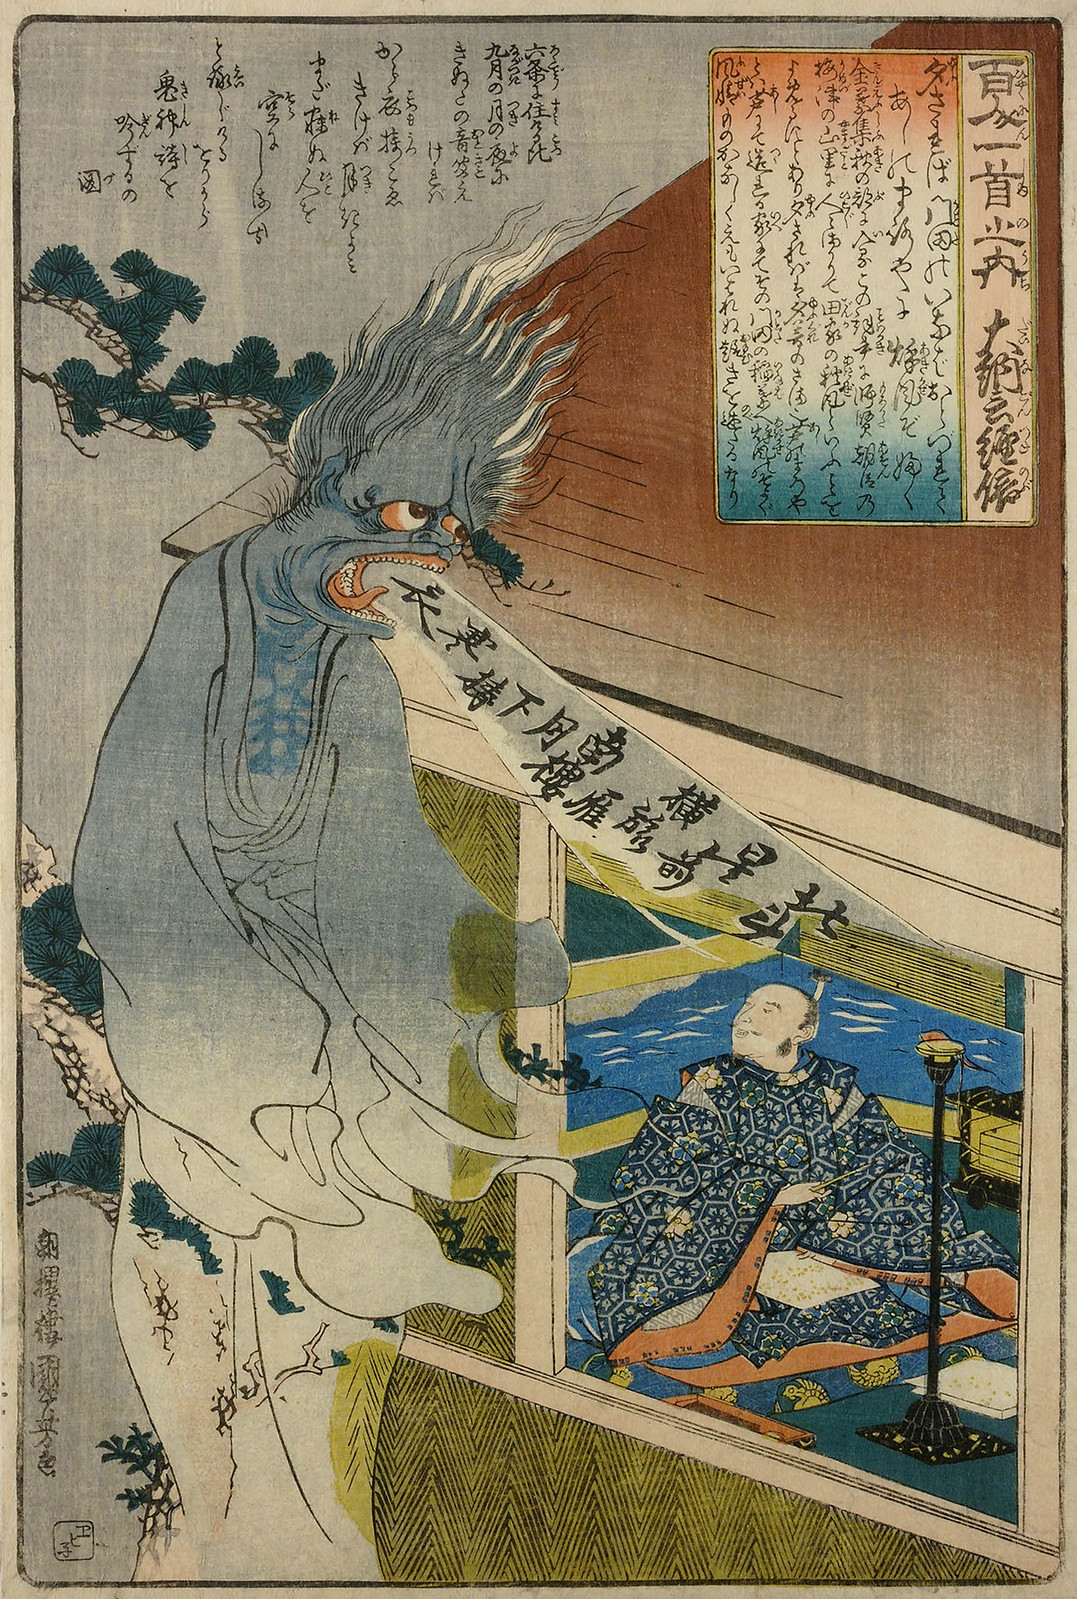 Utagawa Kuniyoshi - The Poet Dainagon Sees an Apparition, 1860